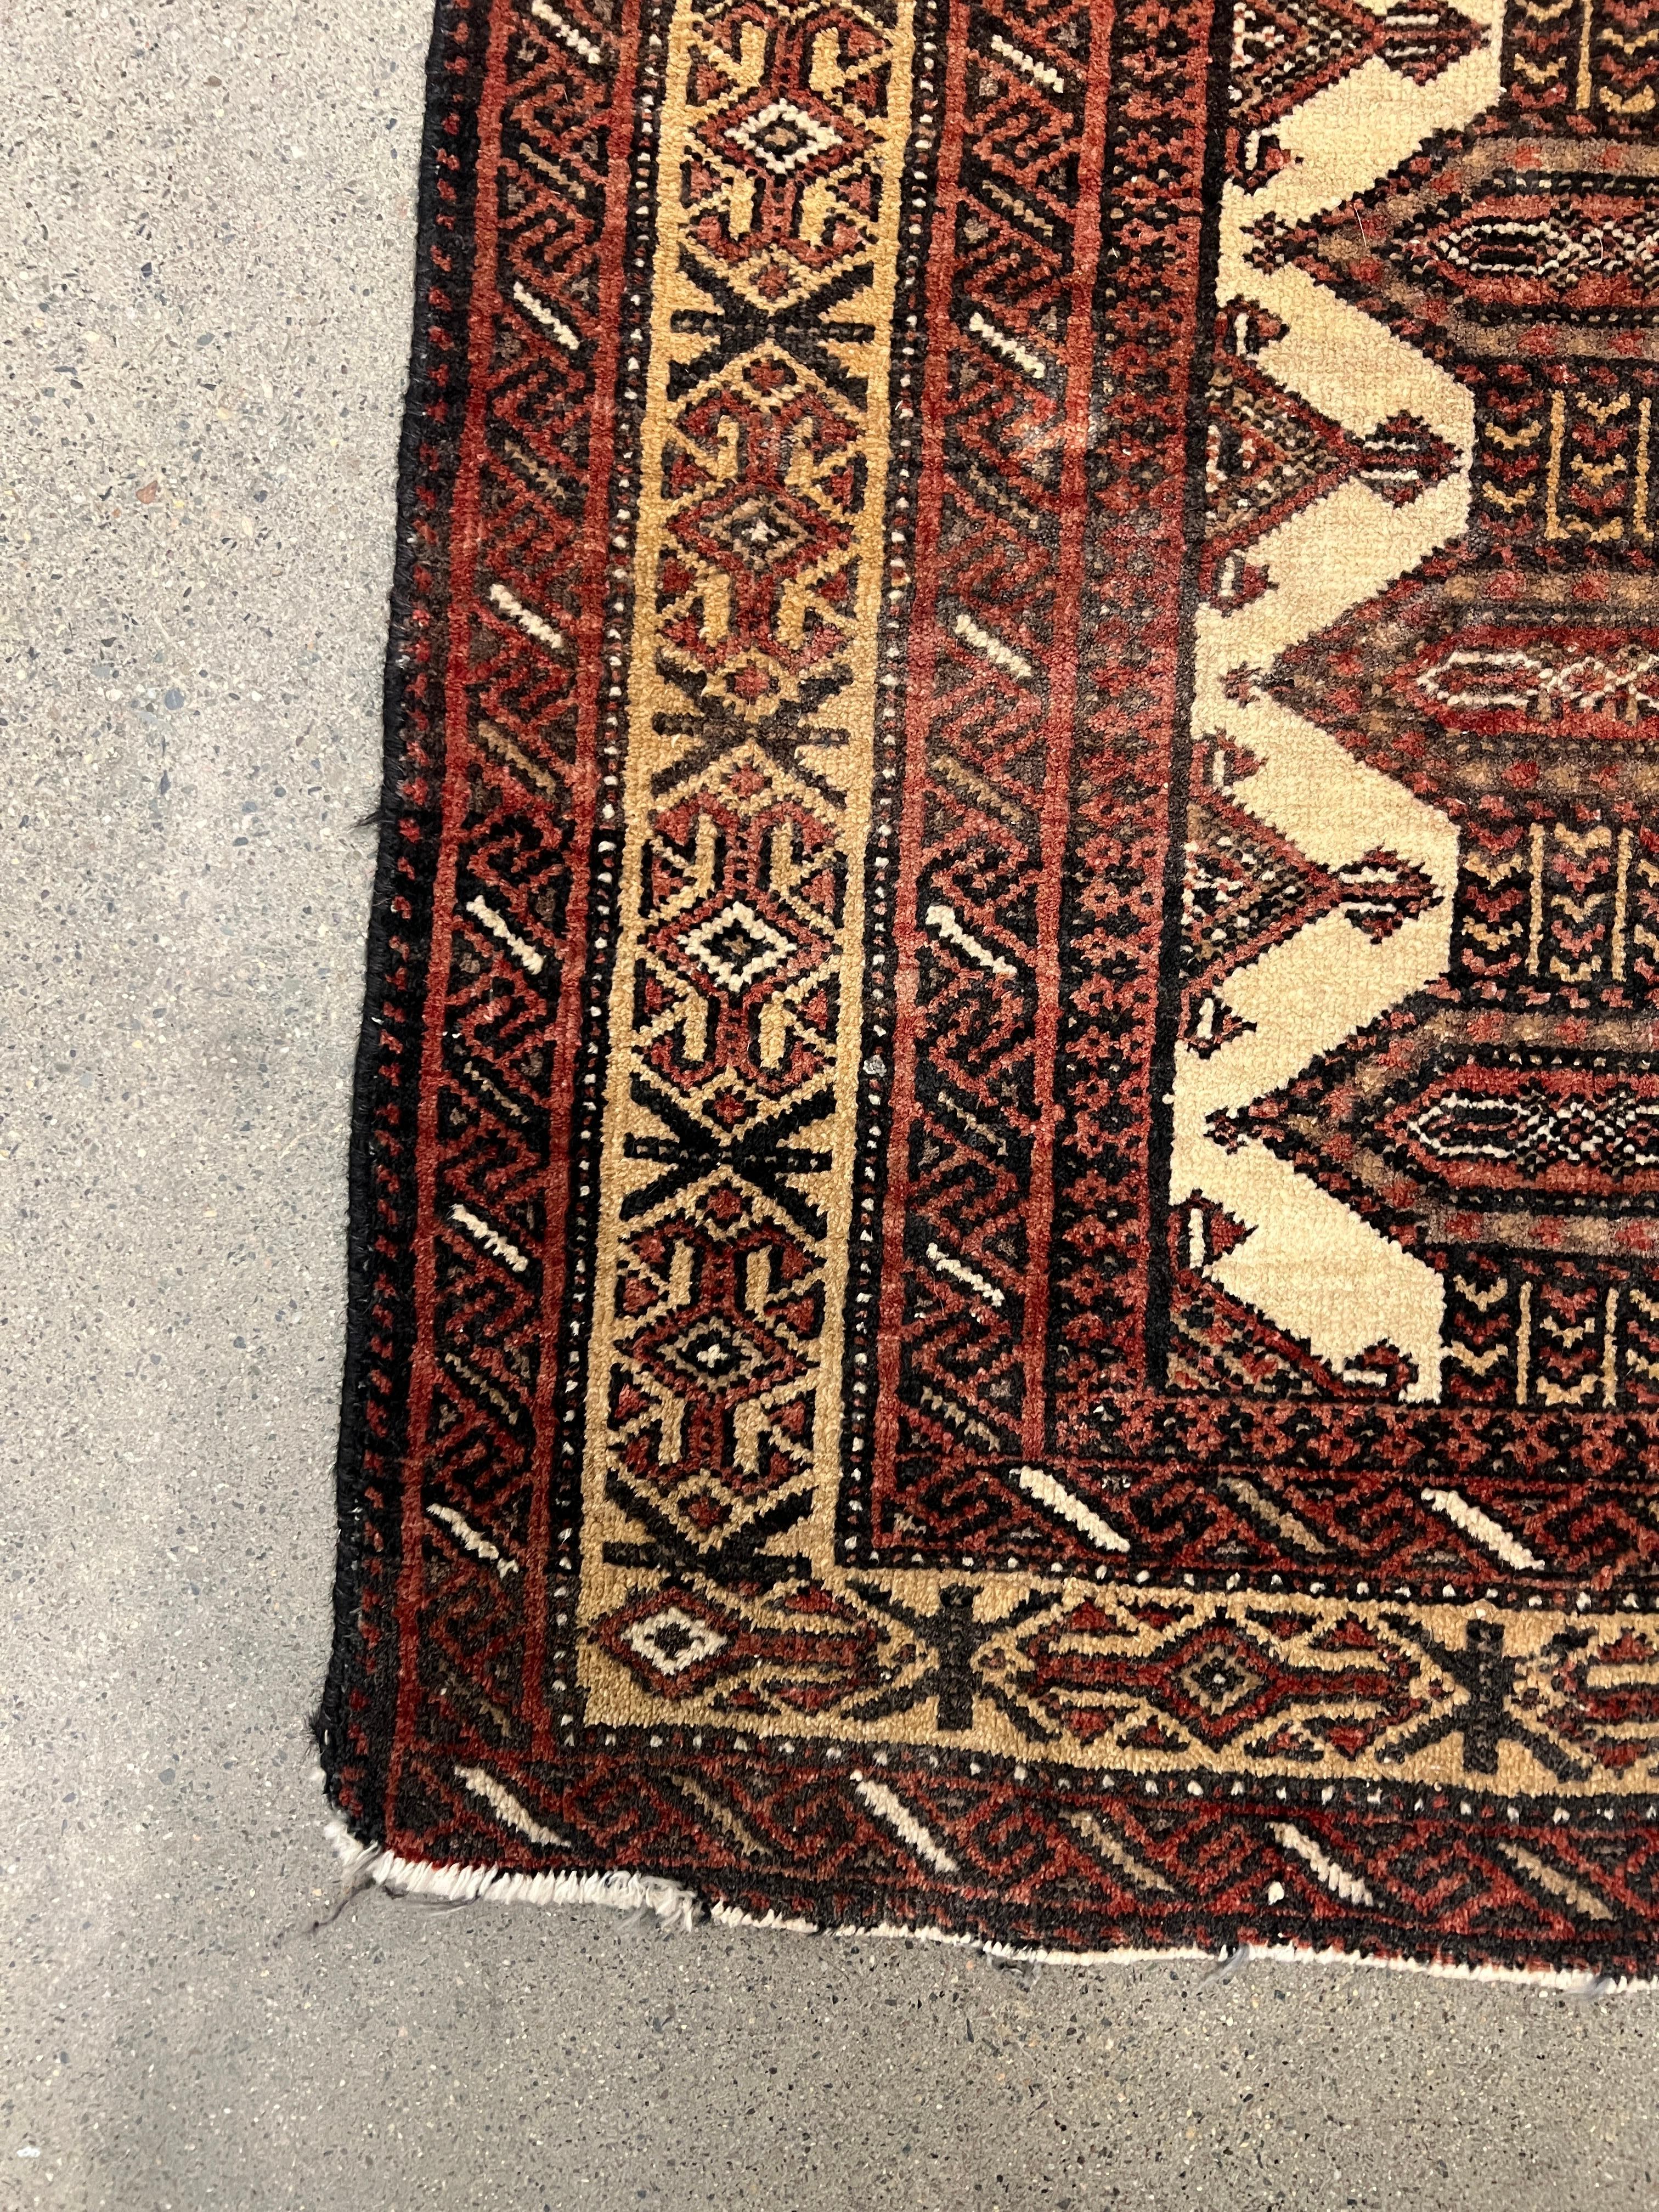 Semi-Antique Afghan Baluchi Wool Rug or carpet 
6'1